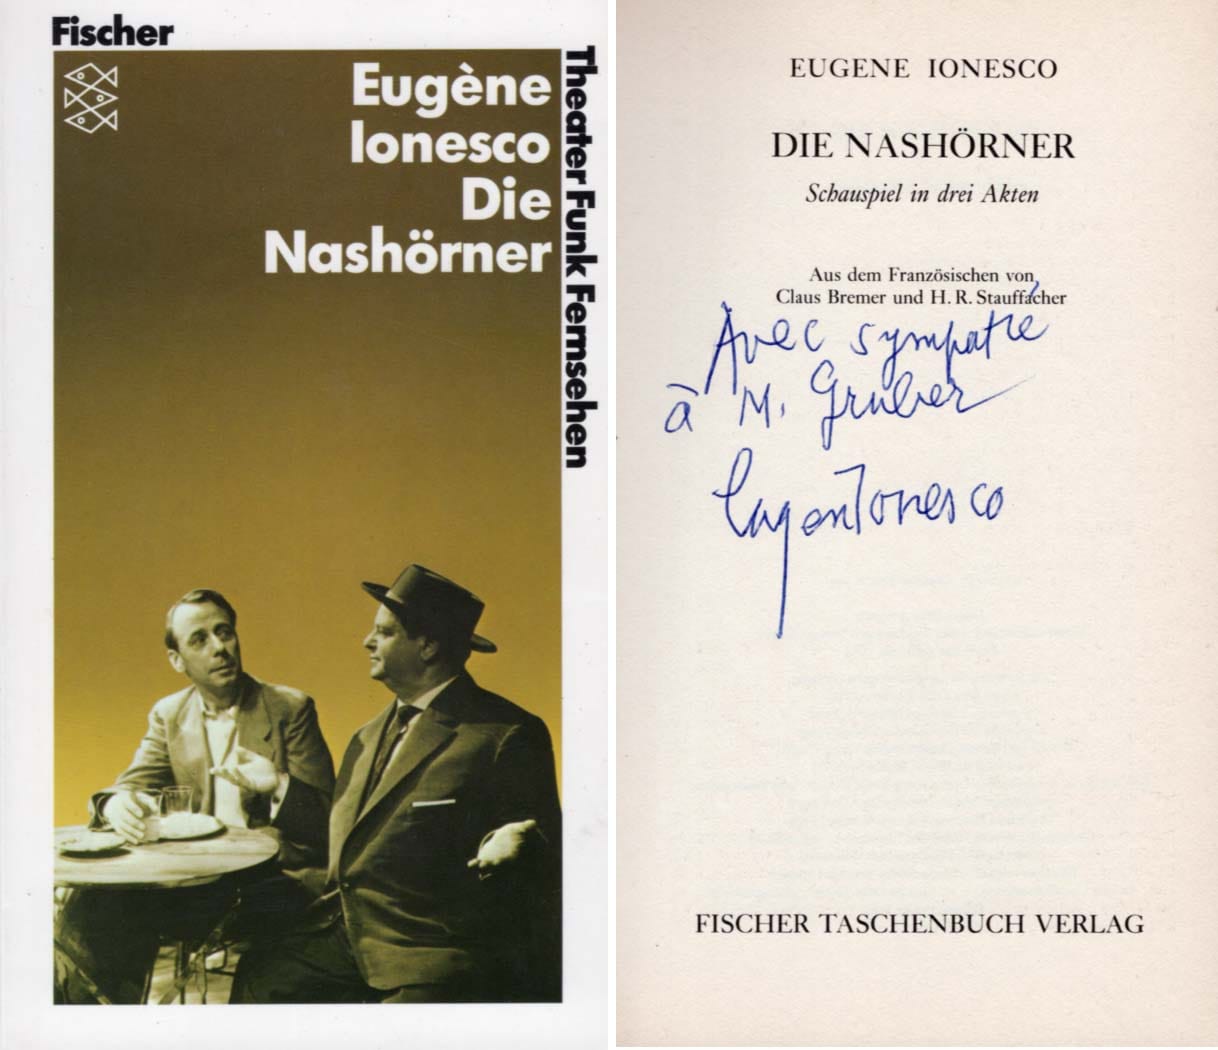 Eugène Ionesco Autograph Autogramm | ID 7960446468245